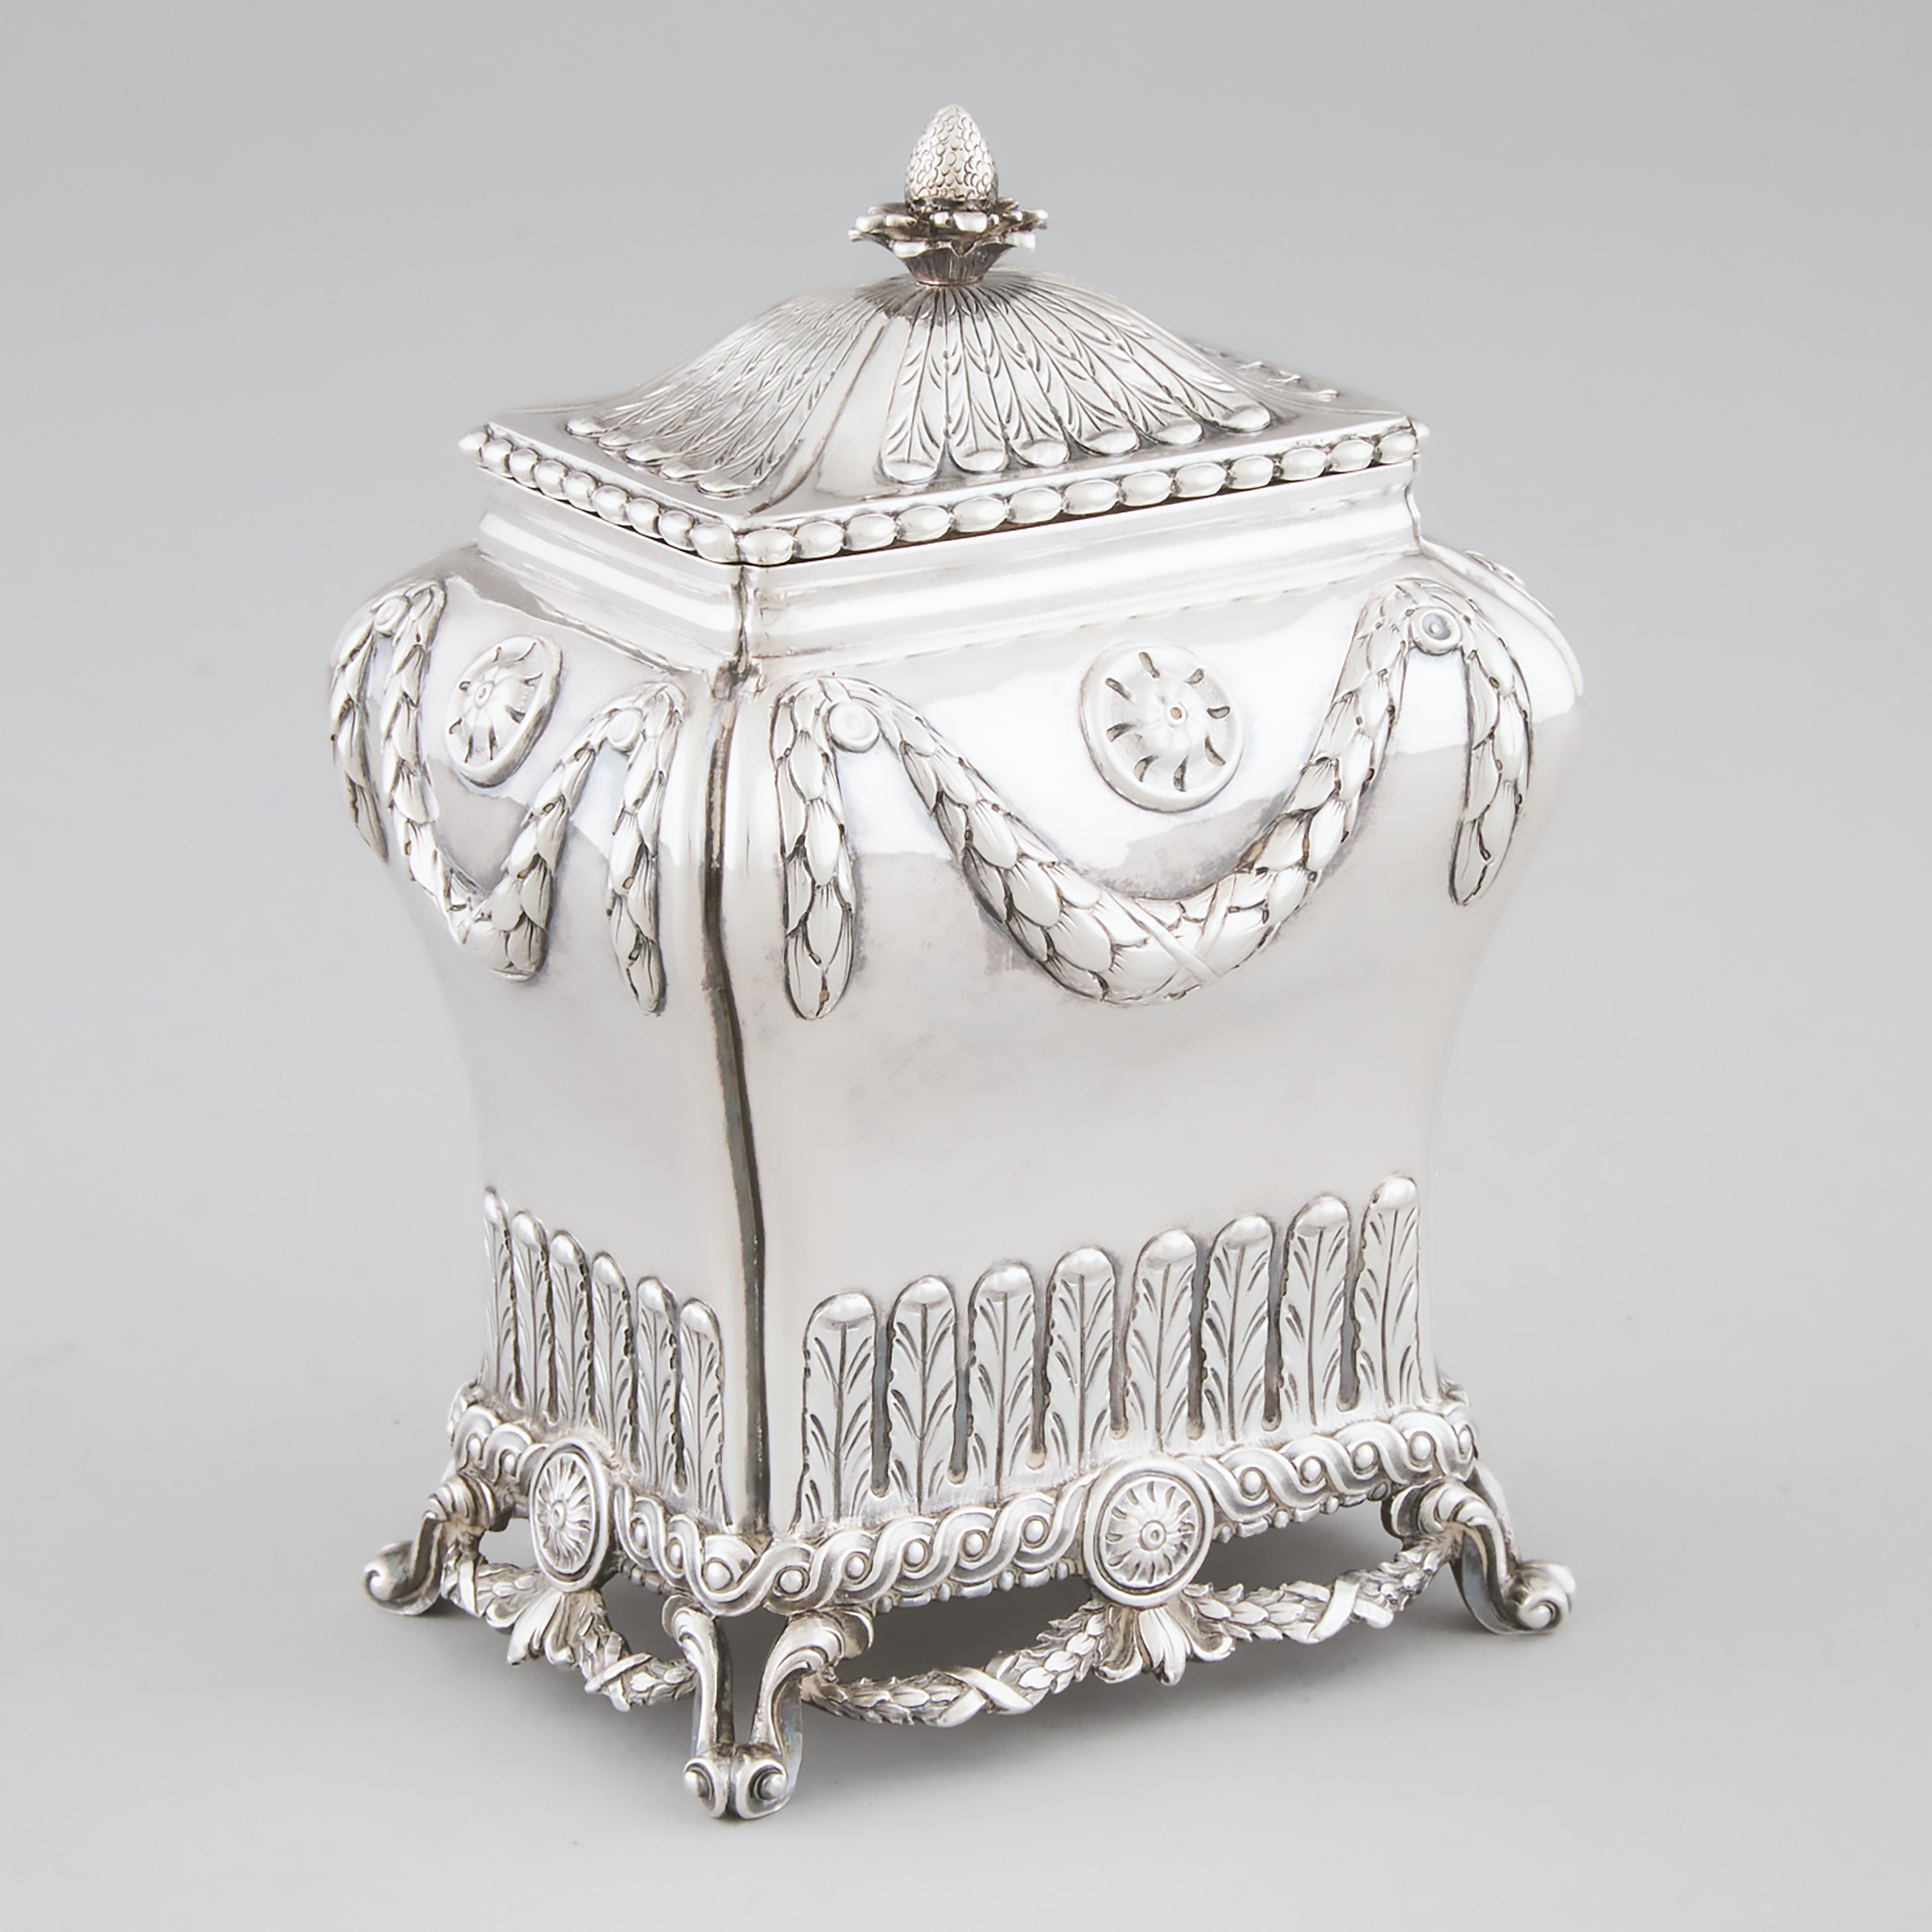 George III Silver Tea Caddy, Pierre Gillois, London, 1773